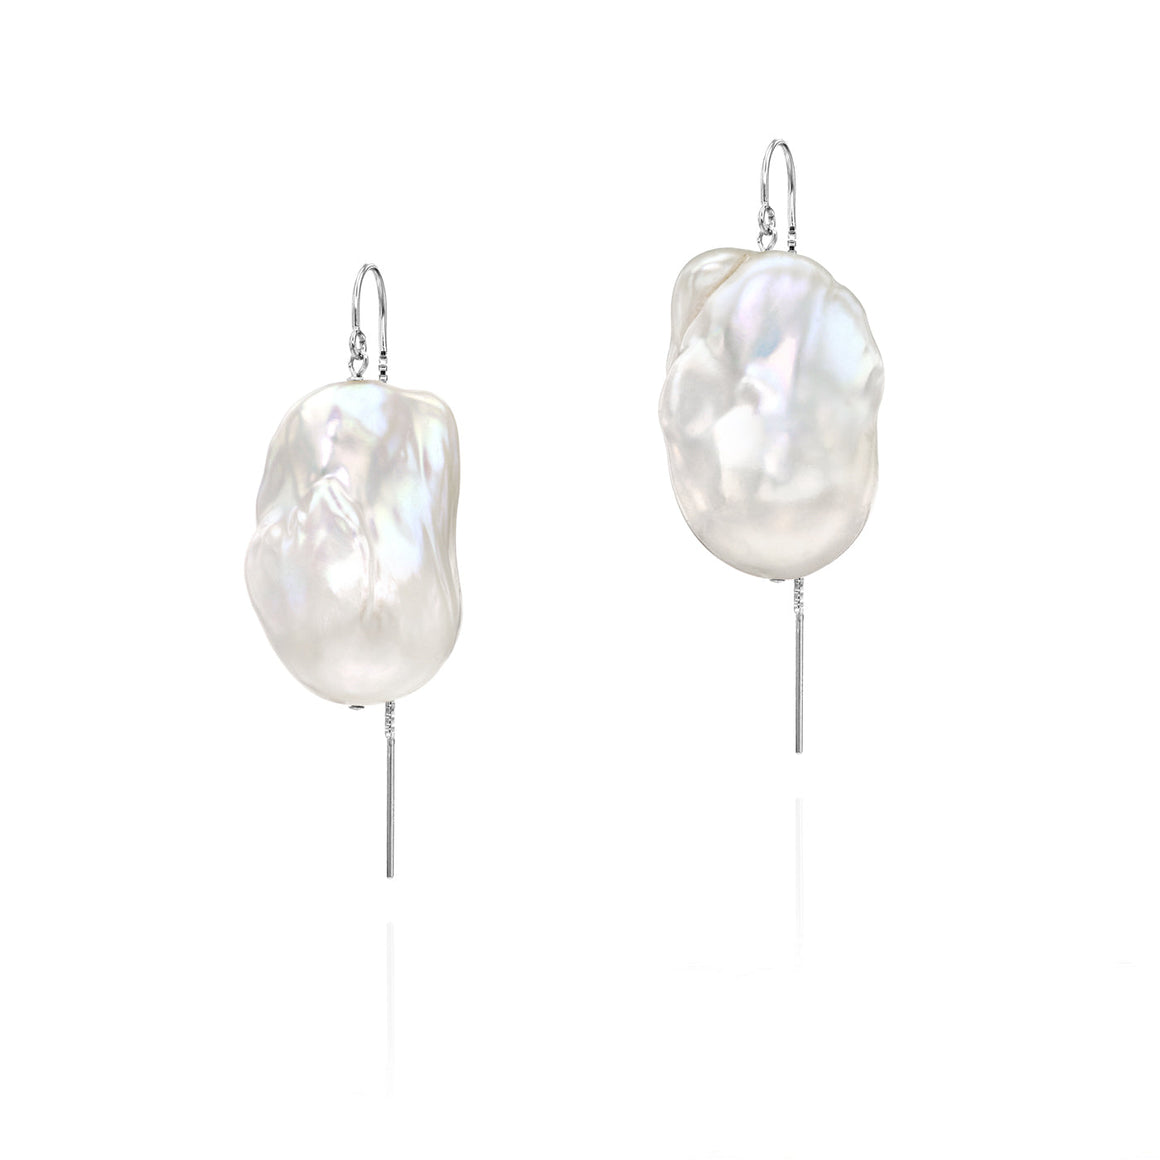 XXL Runway Size 14K White Baroque Freshwater Pearl Drop Threader Earrings Sterling Silver